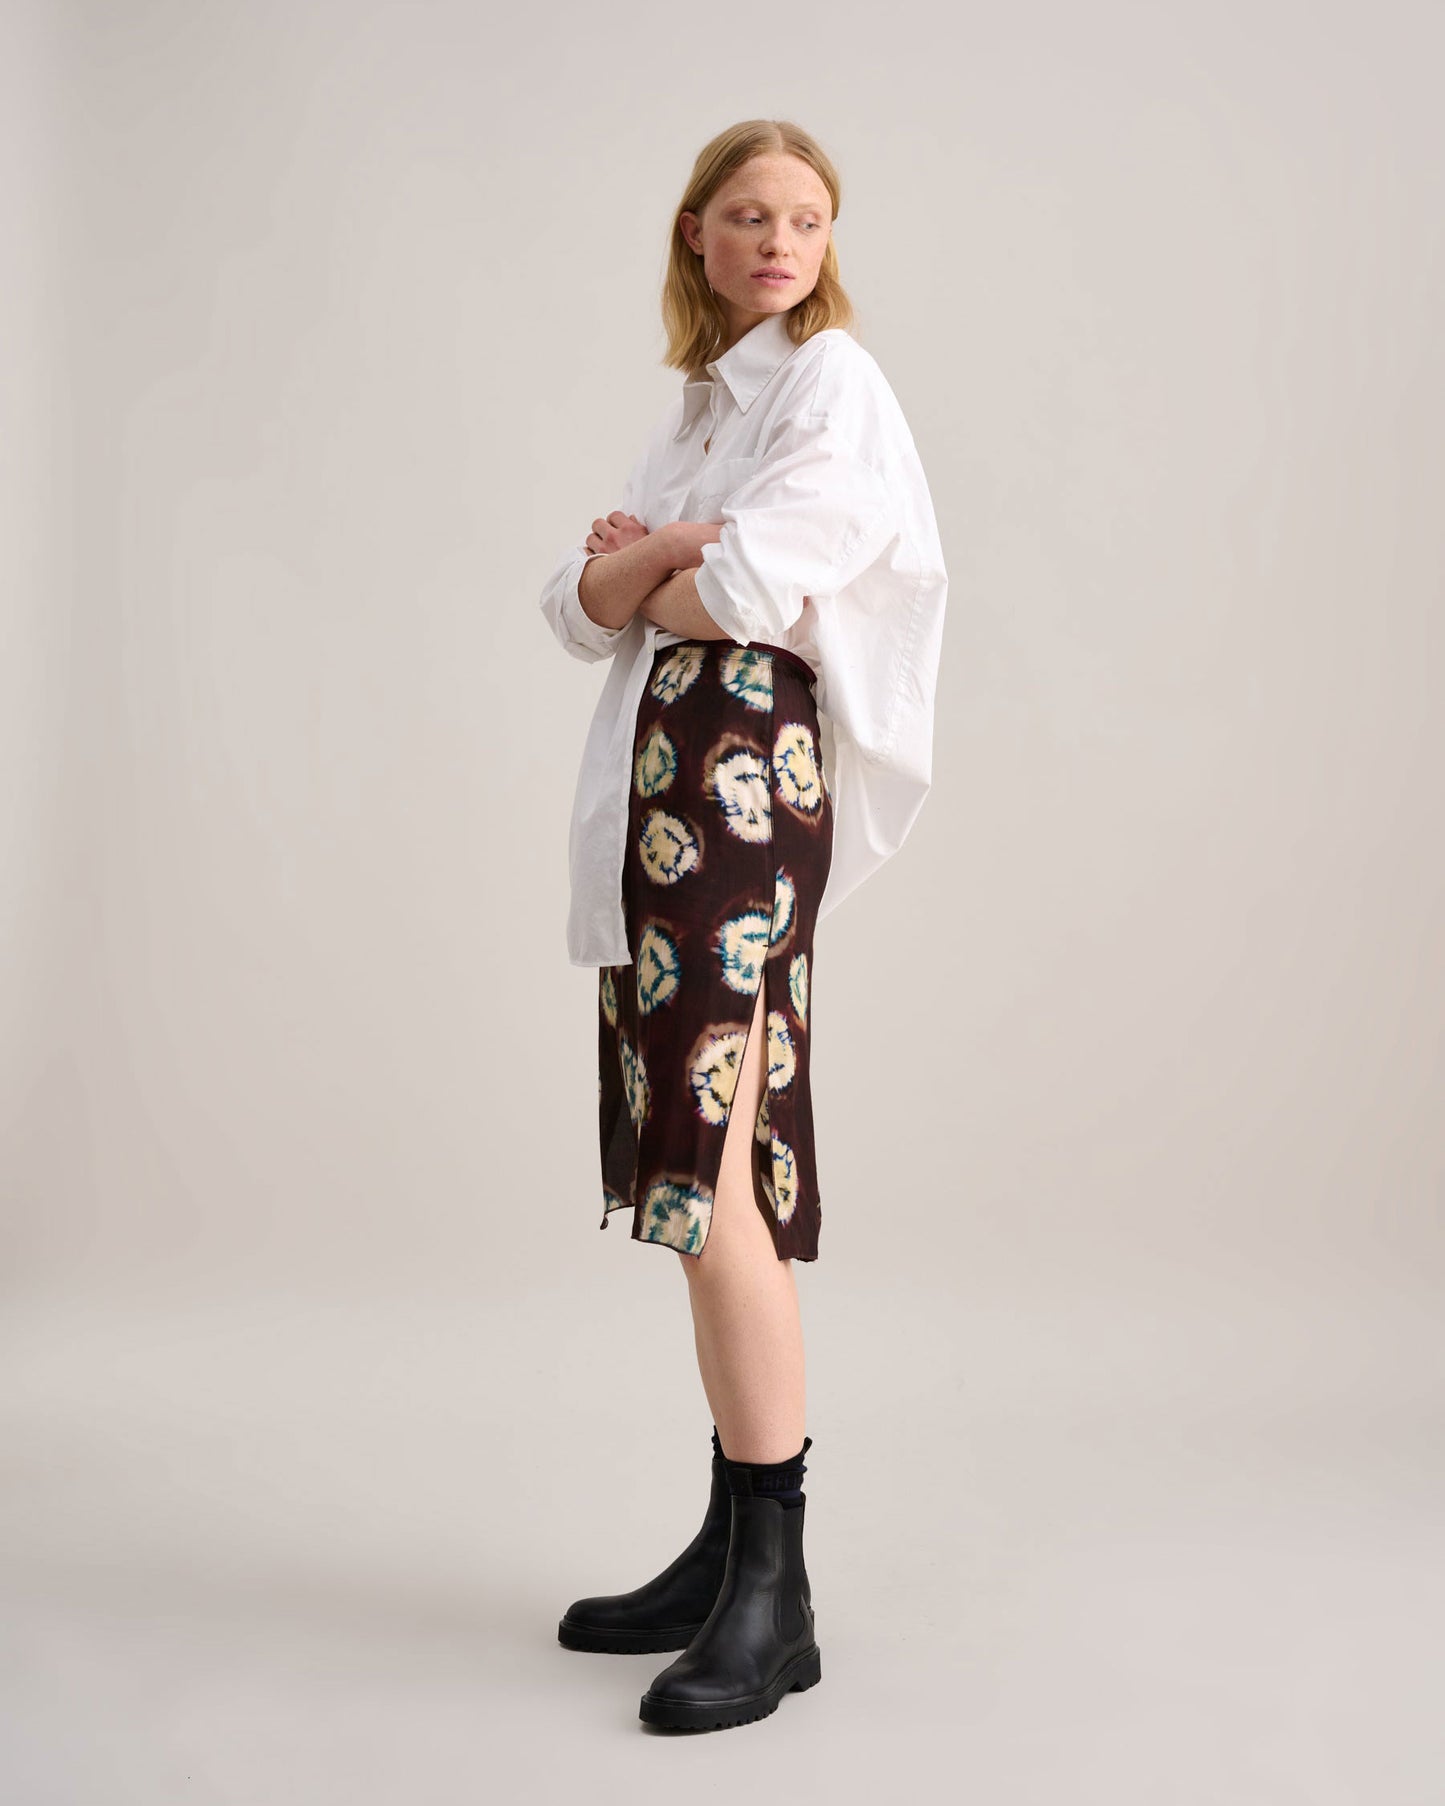 BELLEROSE Texas Skirt in Tie Dye available at Lahn.shop